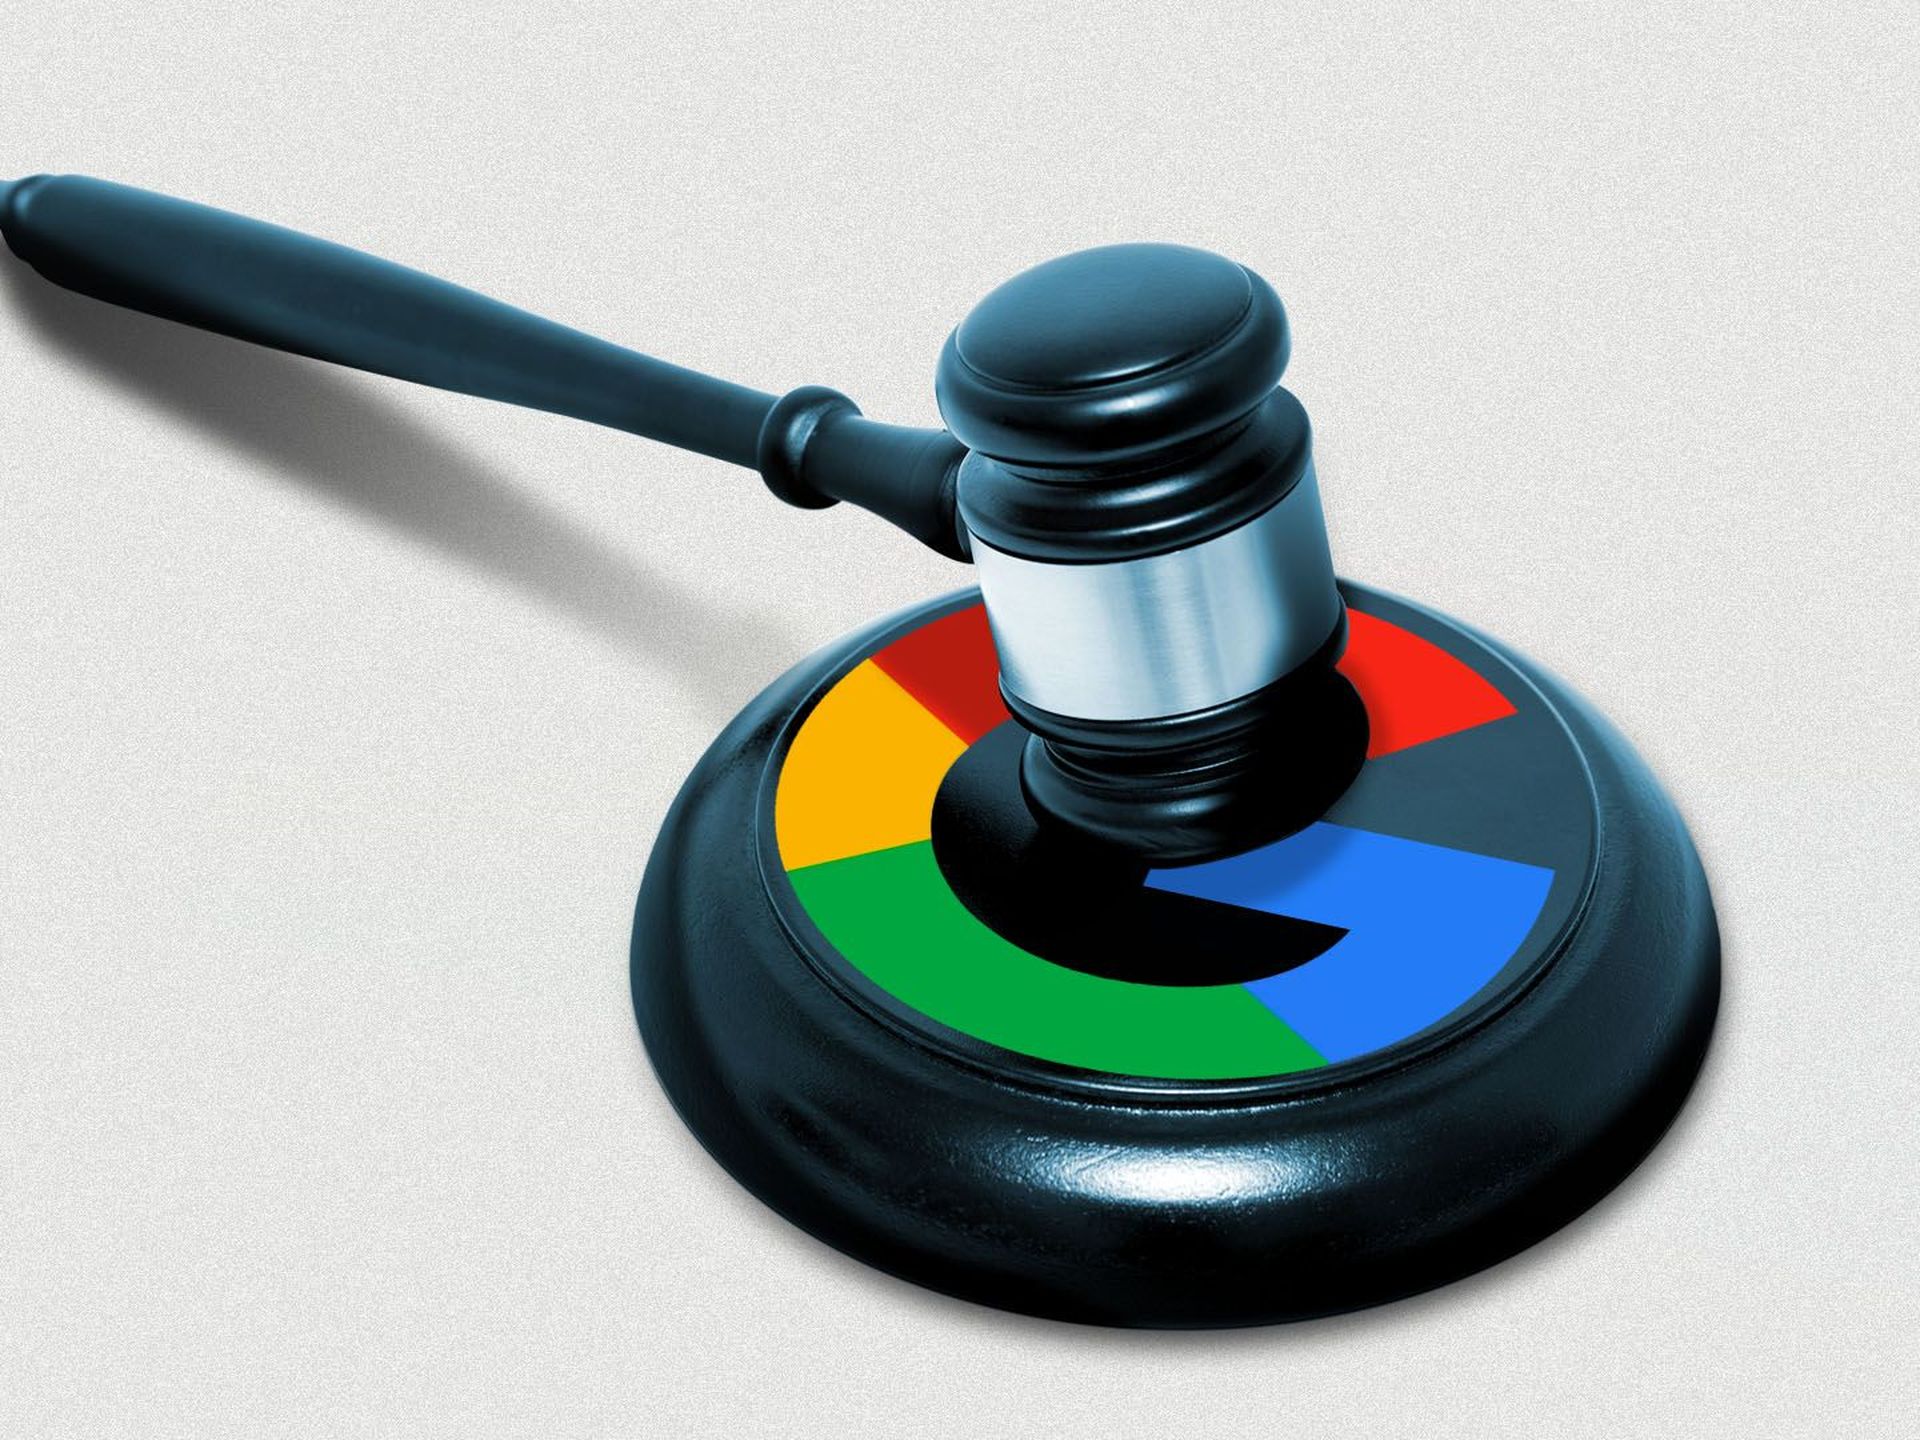 Google has illegal app store monopoly, Epic Games lawsuit finds